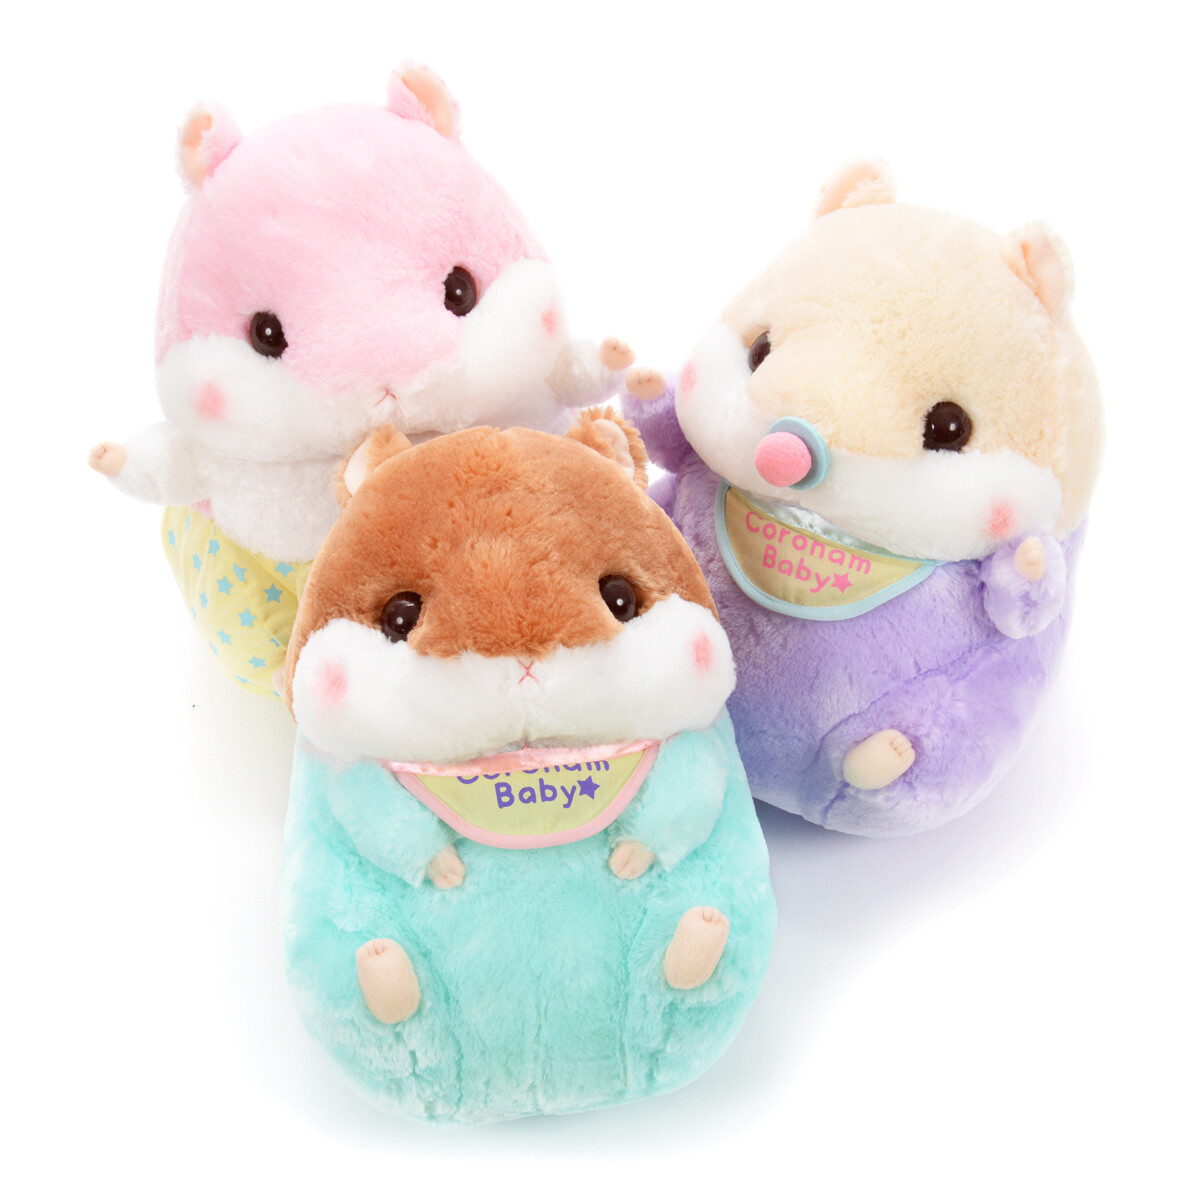 Coroham Coron Baby Hamster Plush 